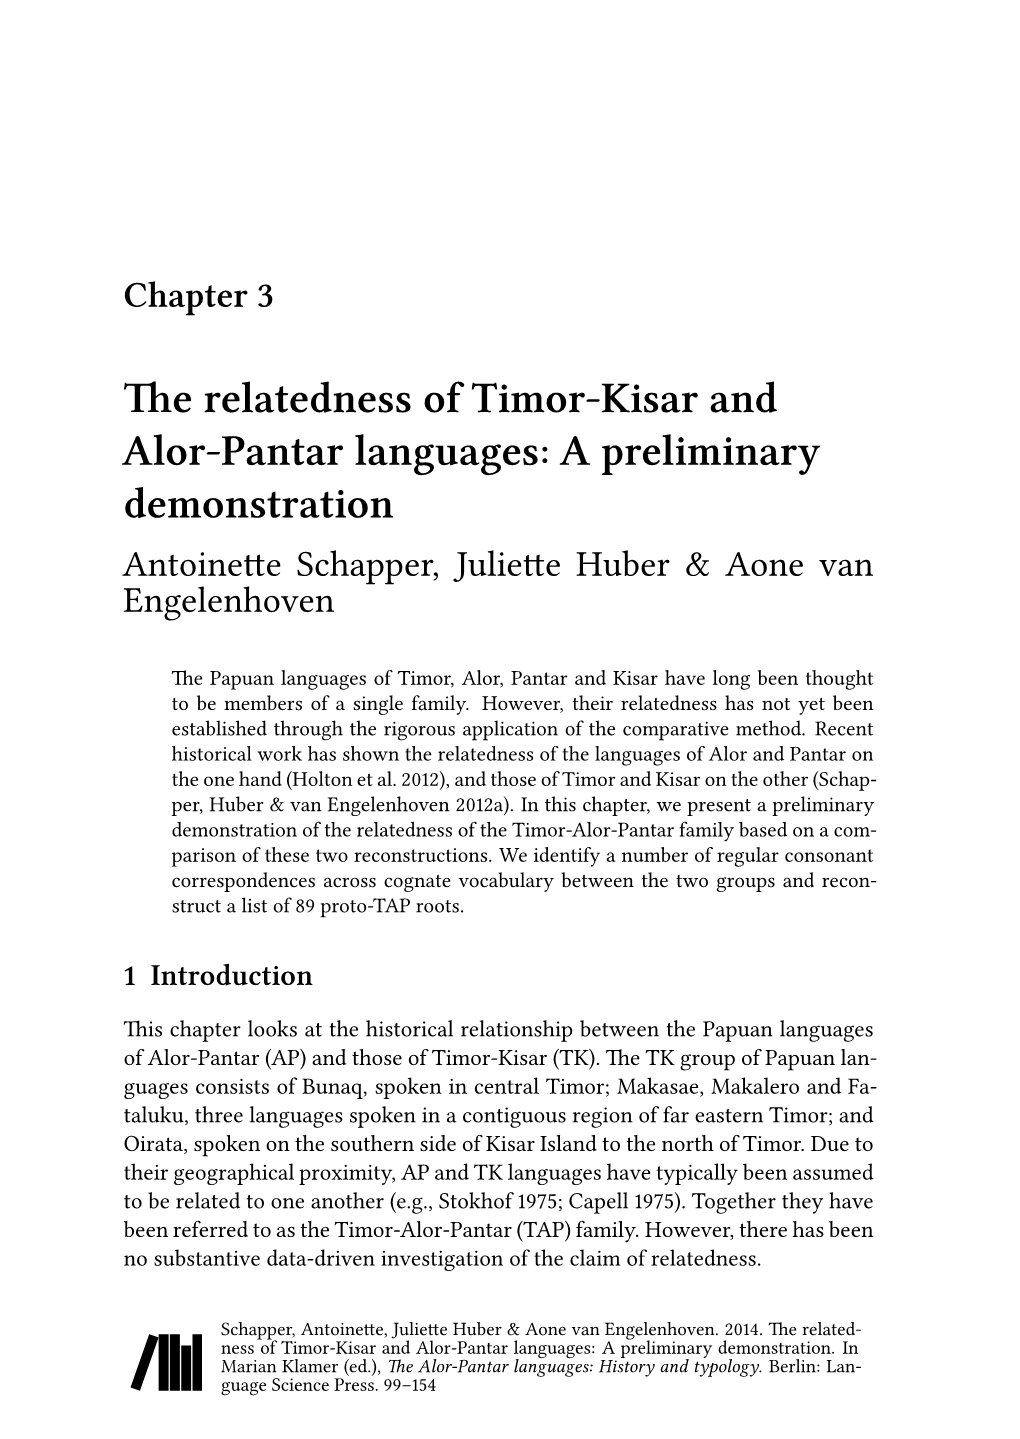 The Relatedness of Timor-Kisar and Alor-Pantar Languages: a Preliminary Demonstration Antoinette Schapper, Juliette Huber & Aone Van Engelenhoven